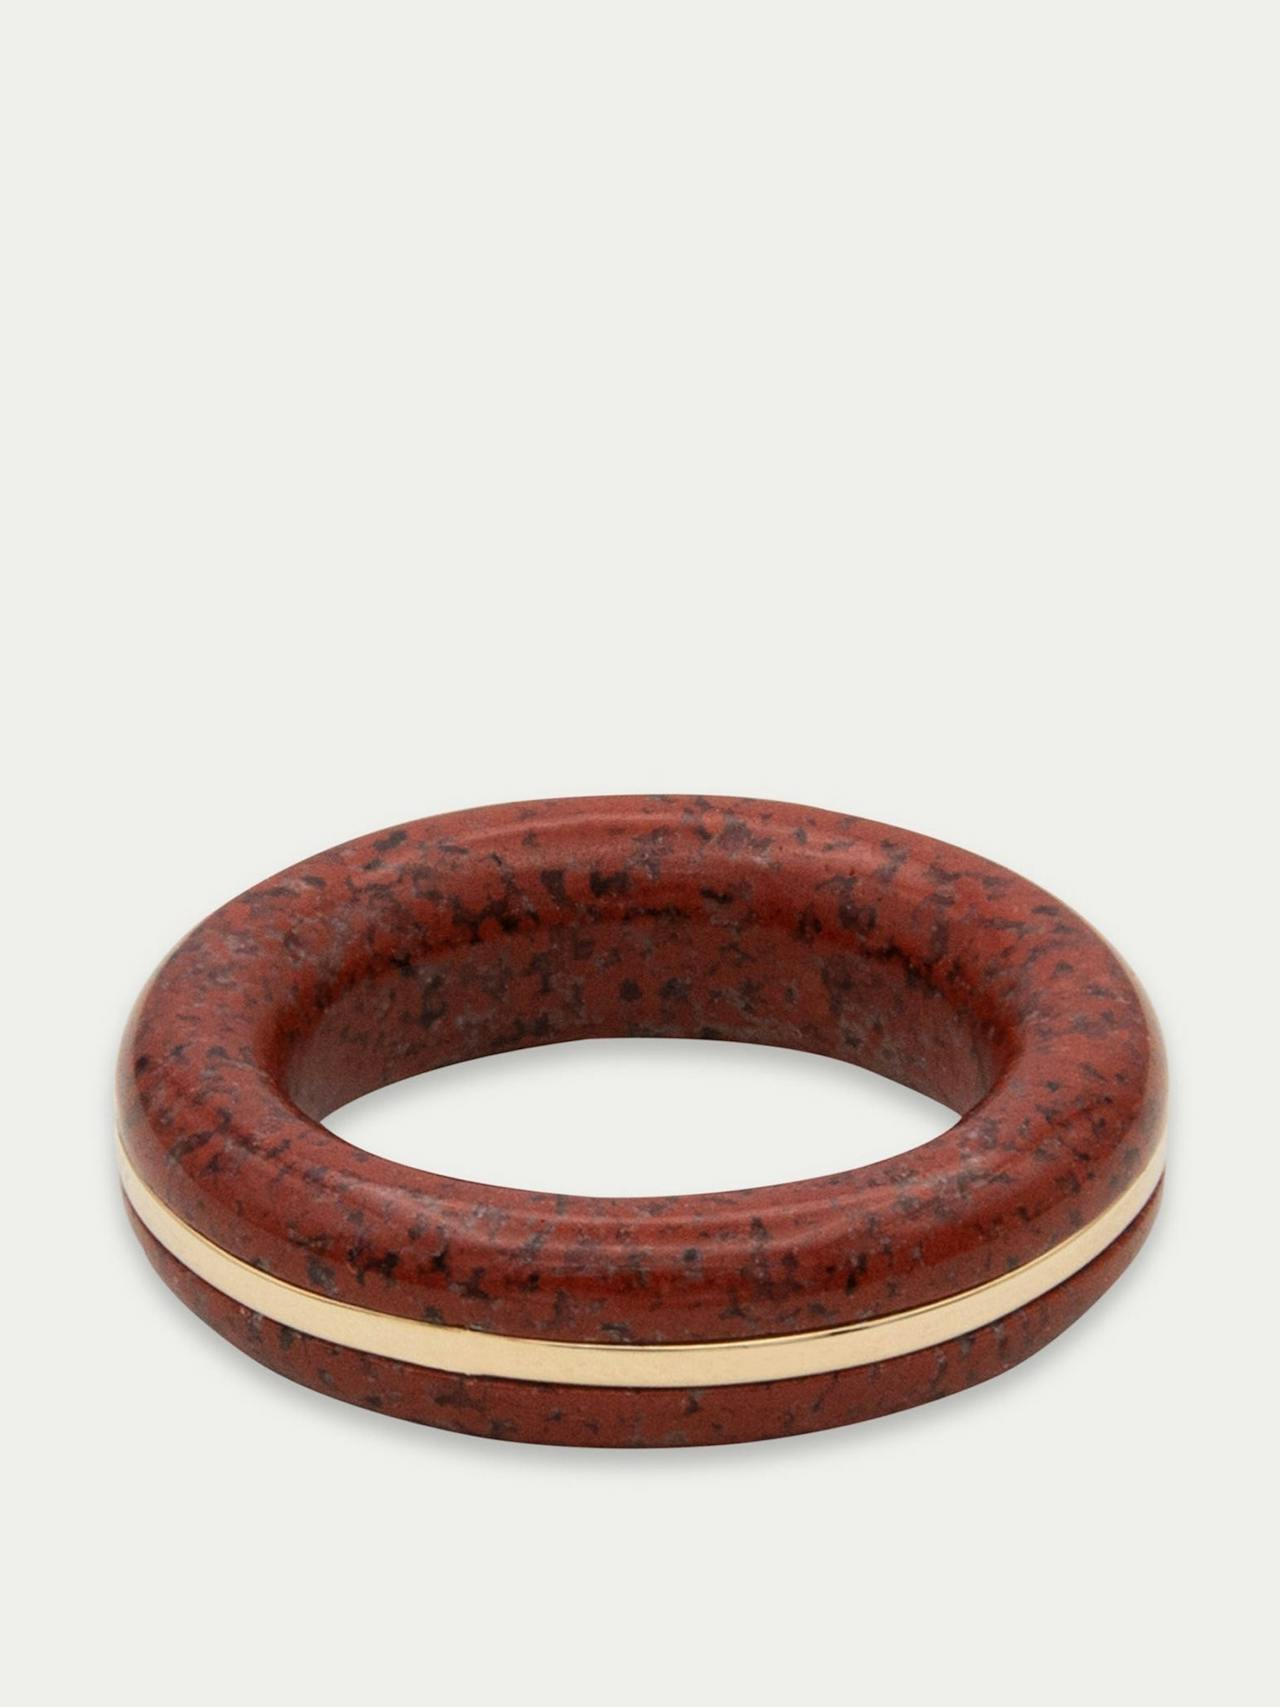 Essential Gem red jasper stacking ring